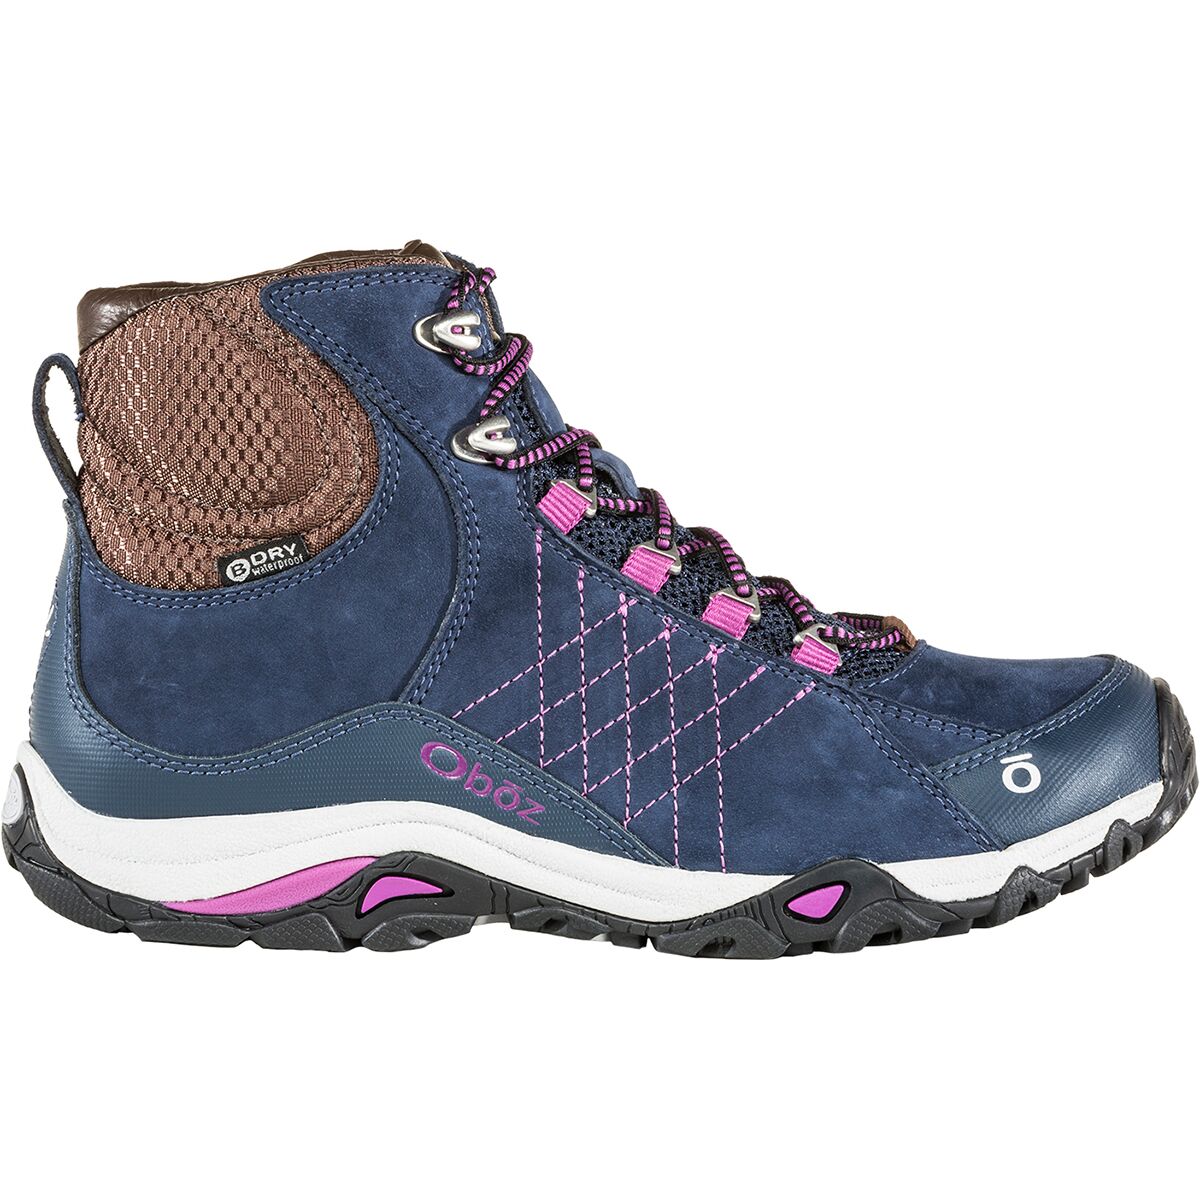 Oboz Sapphire Mid B-Dry Hiking Boot - Wide - Women's